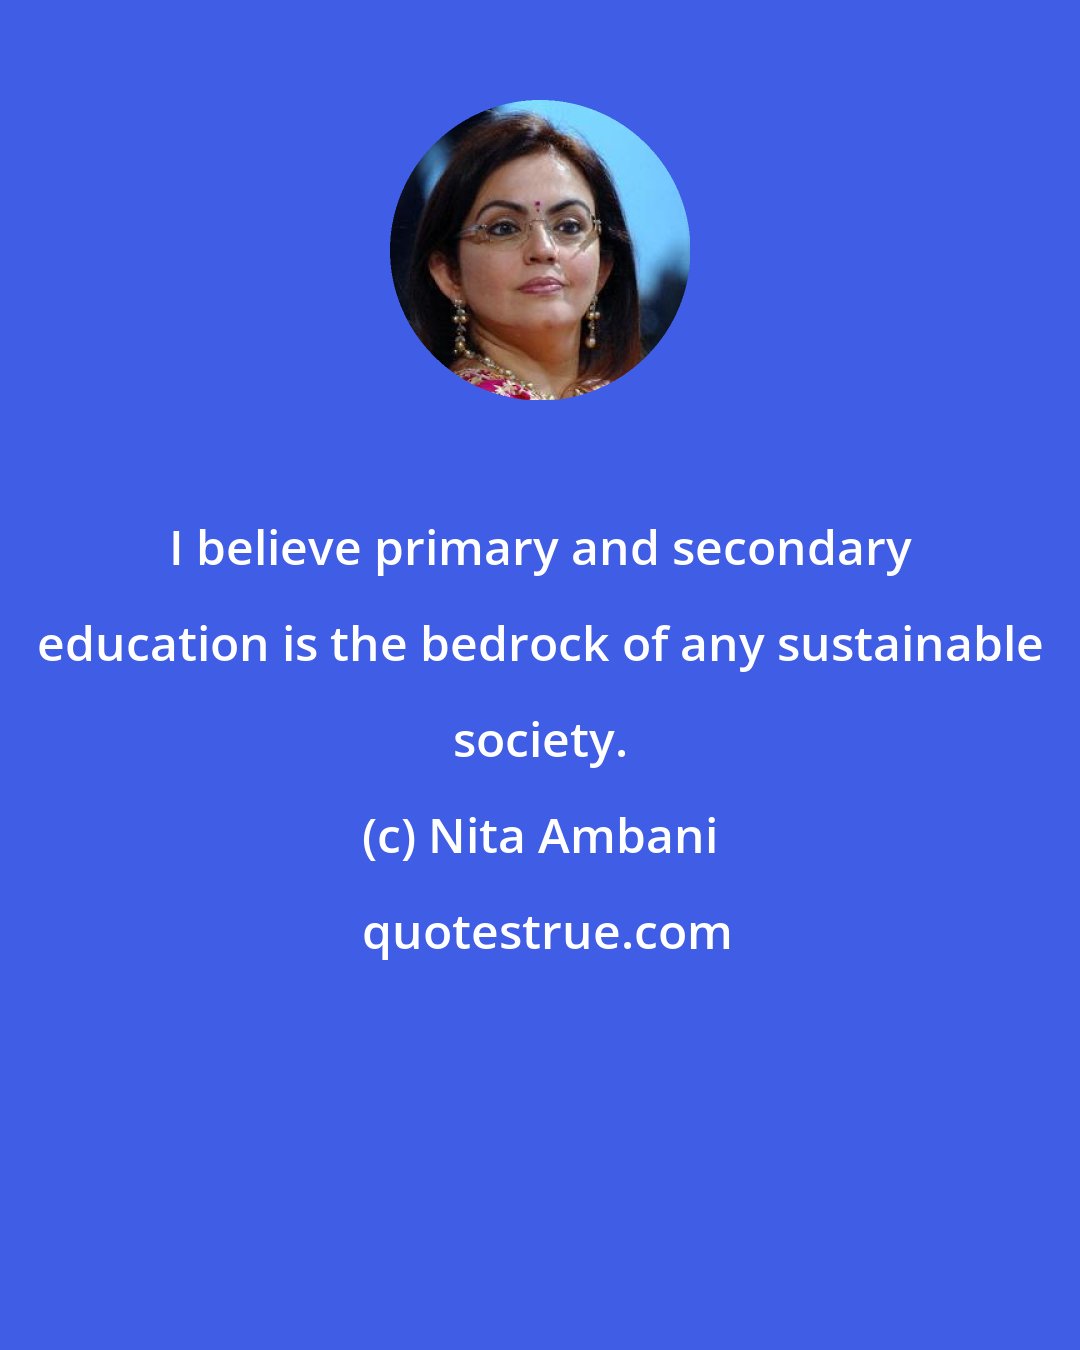 Nita Ambani: I believe primary and secondary education is the bedrock of any sustainable society.